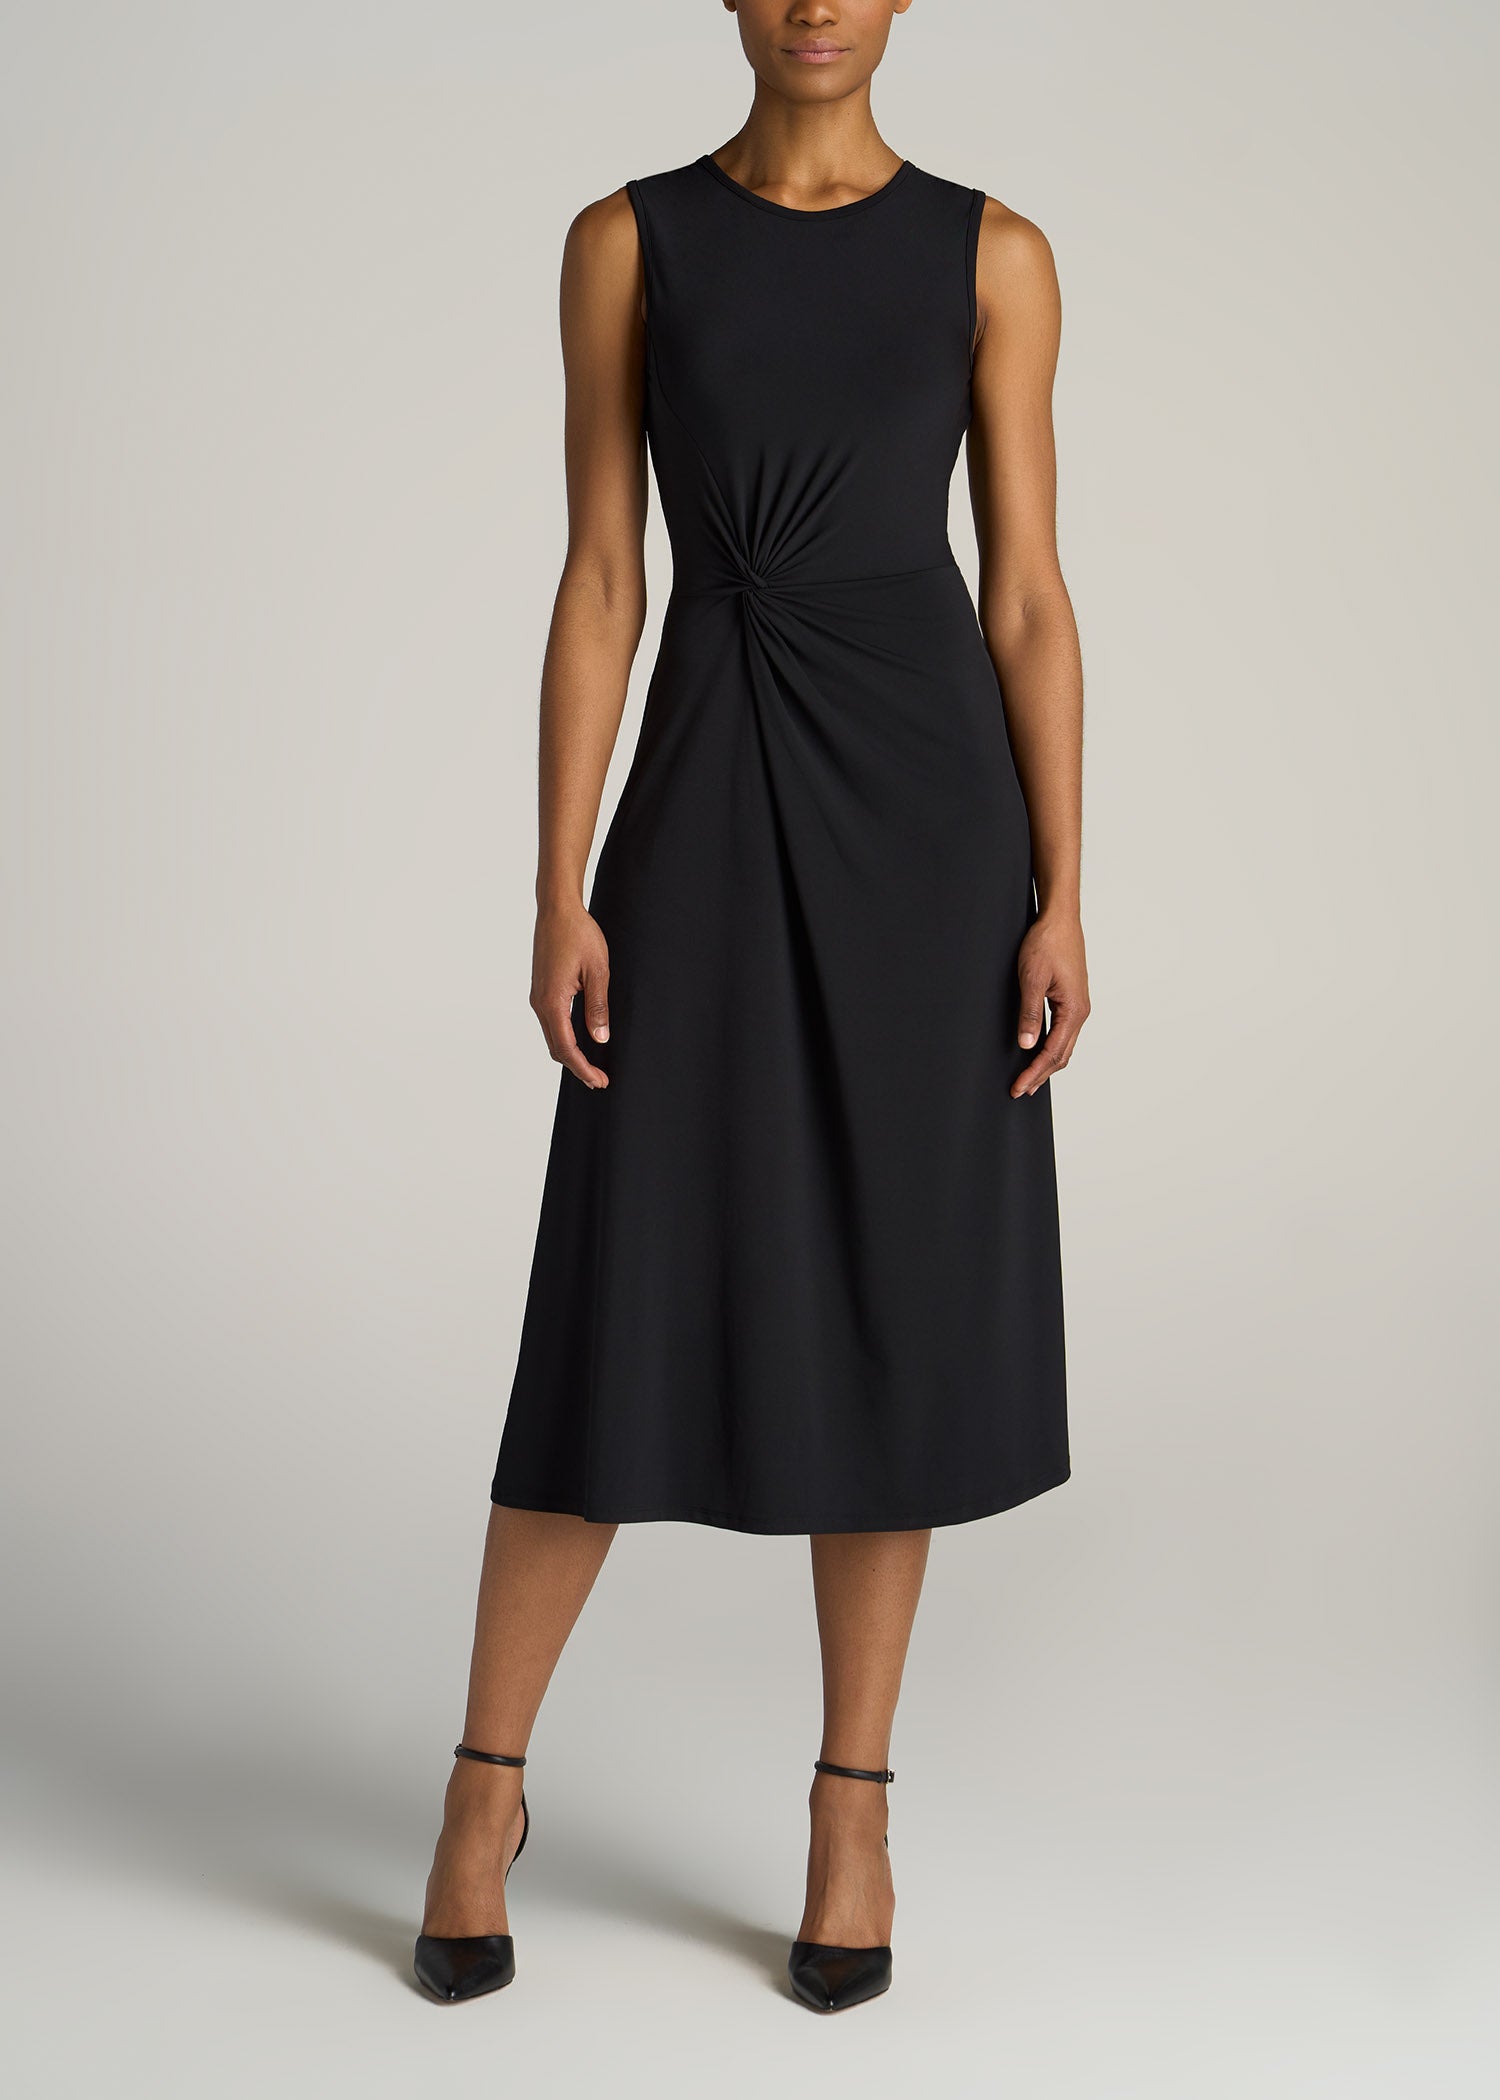 Sleeveless Knot Front Dress for Tall Women